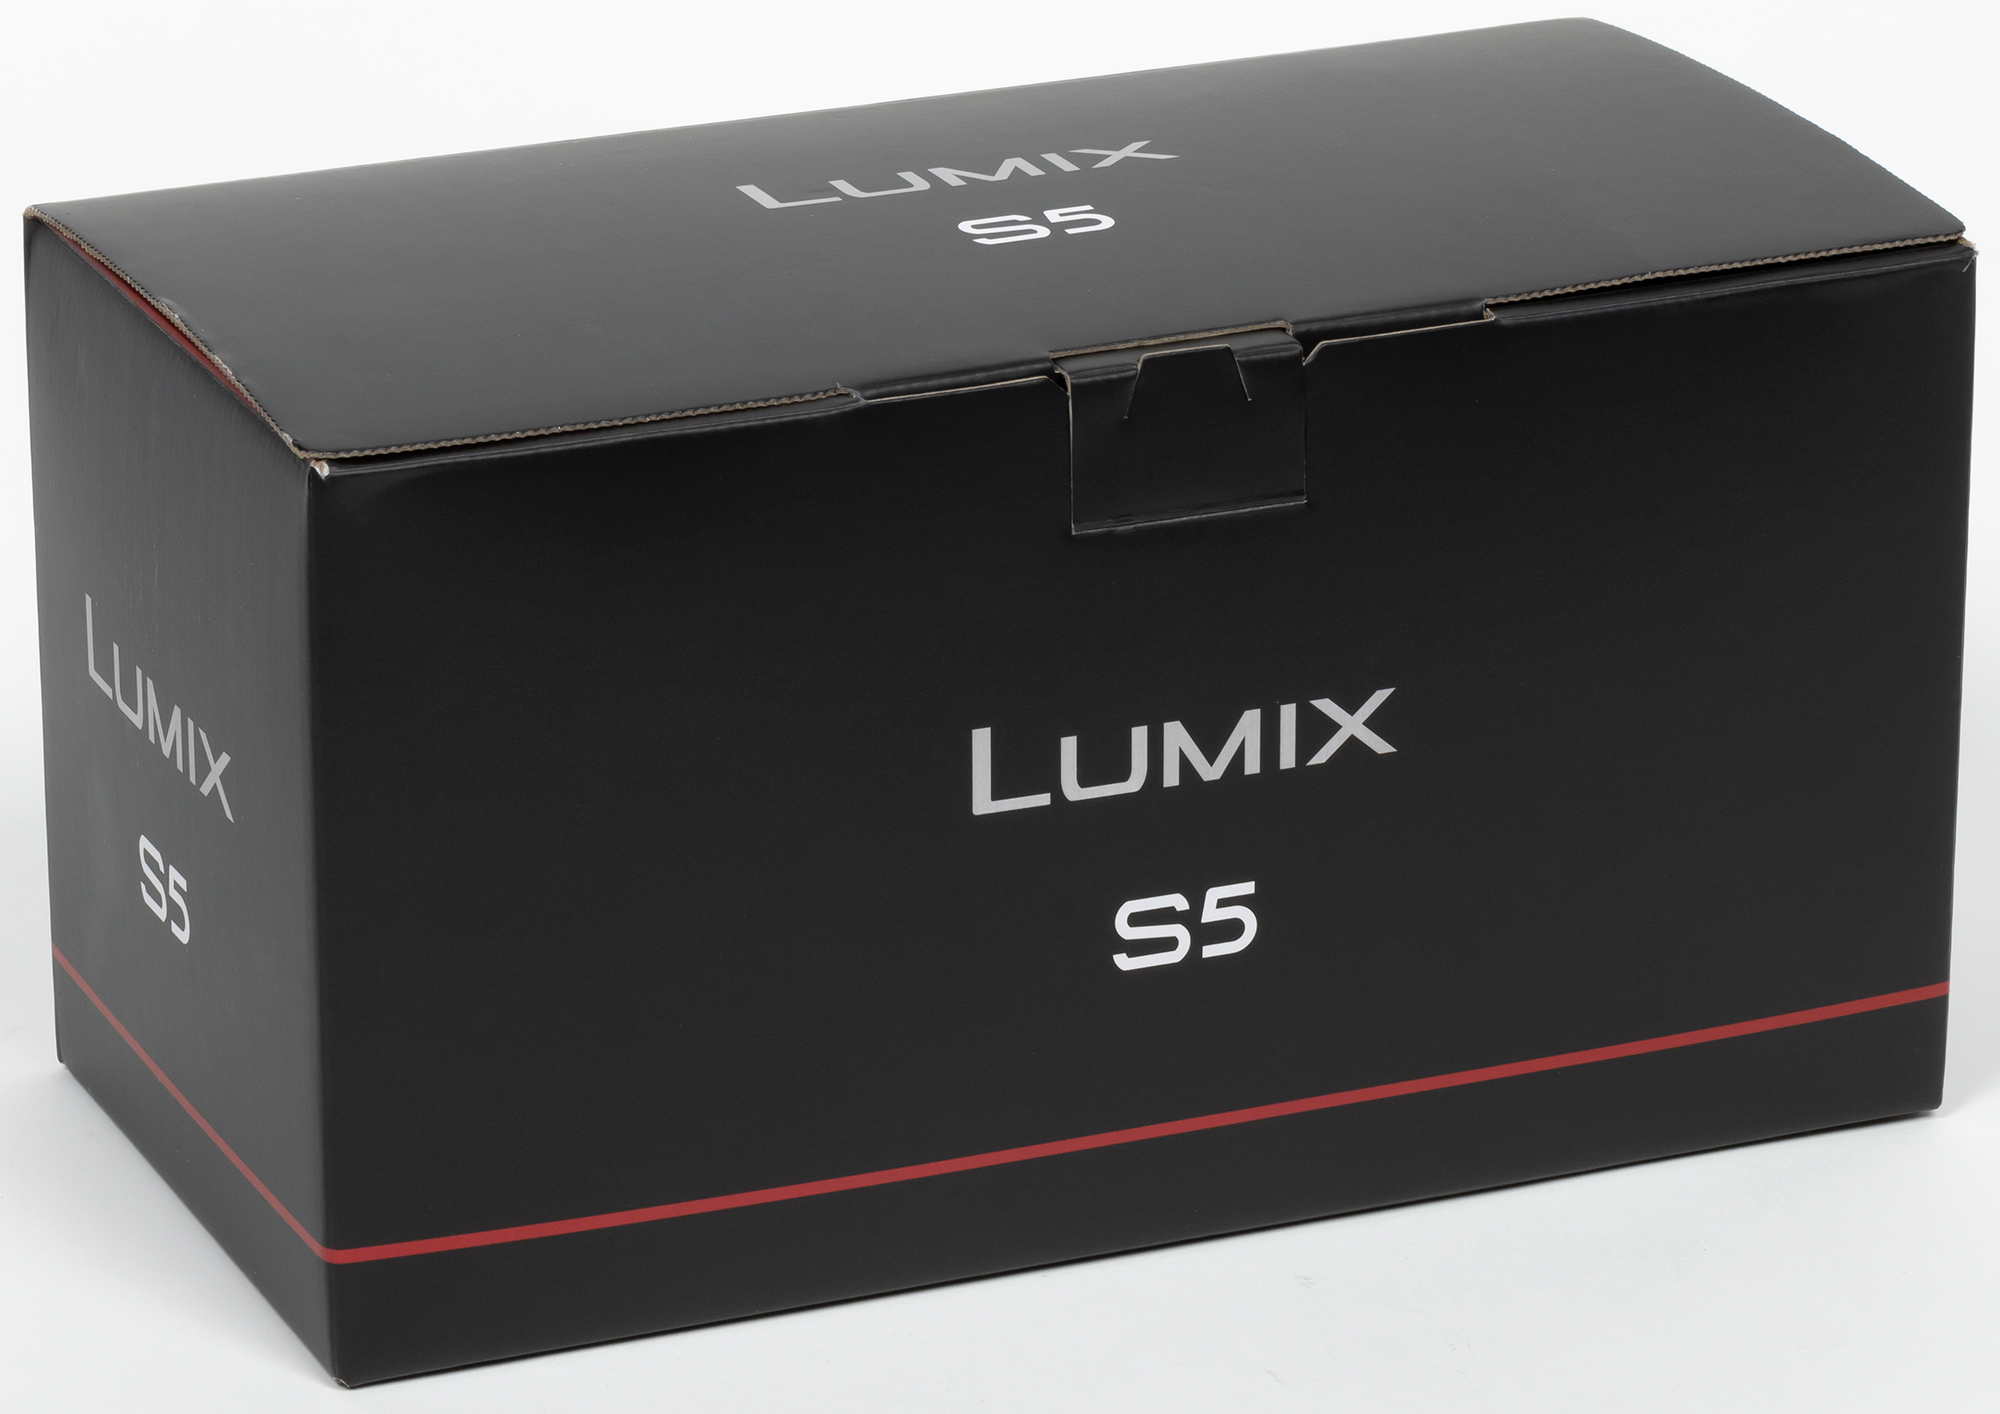 Panasonic dc s5. Lumix DC-s5. Lumix l Mount упаковка. Panasonic Lumix DMC s5 в коробке. Часы Lumix Nox sxc 20 seters характеристики.